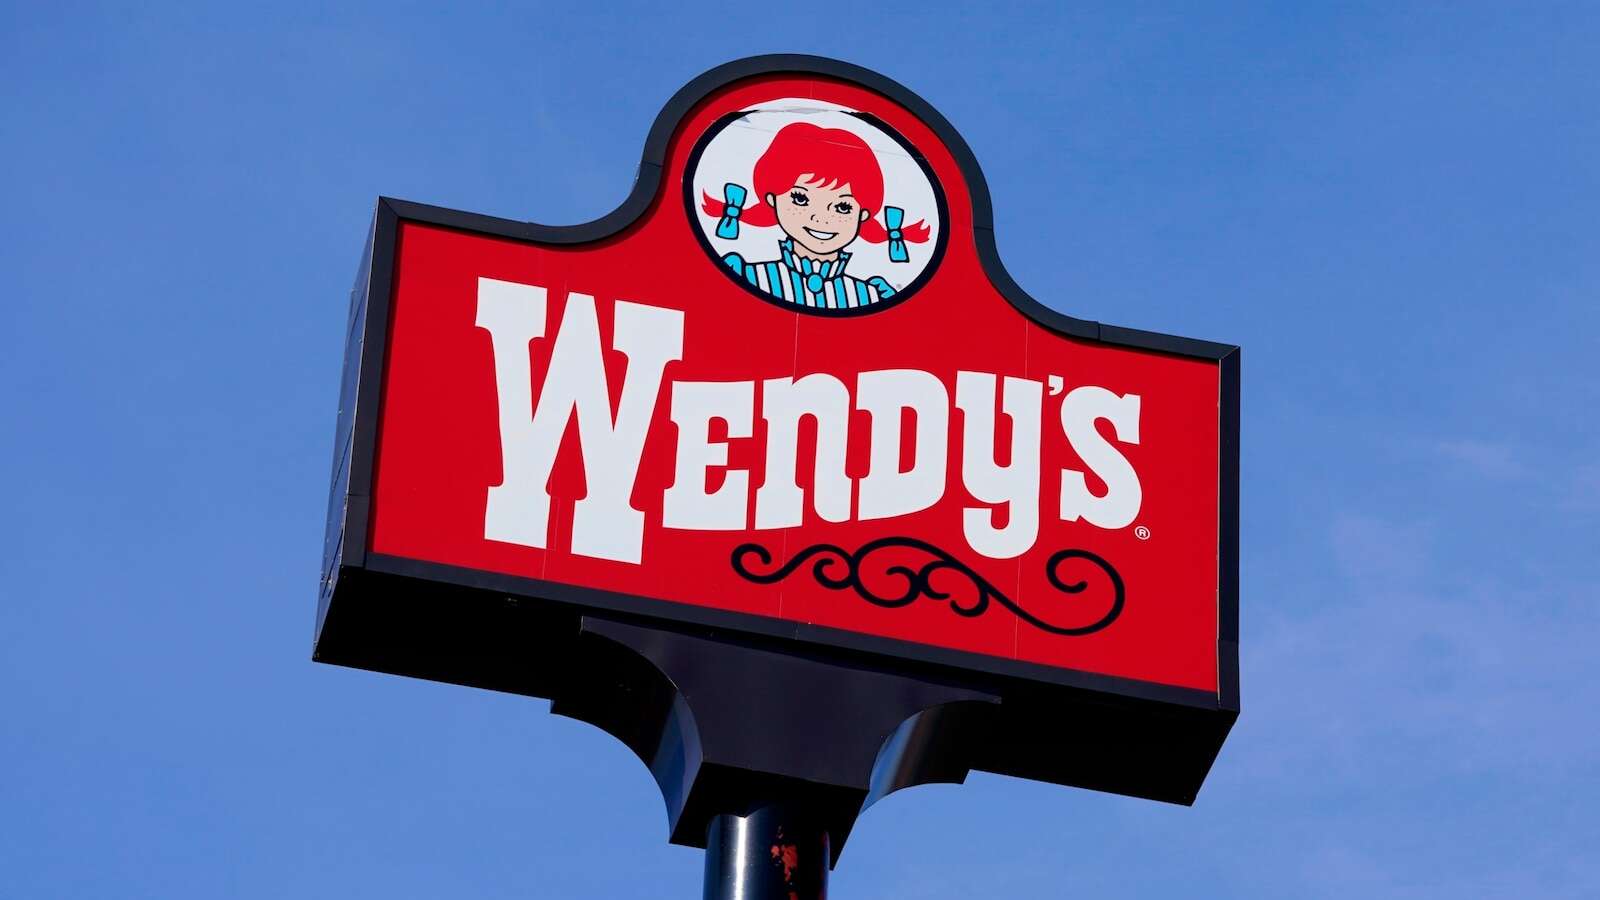 Wendy's says it won't raise menu prices